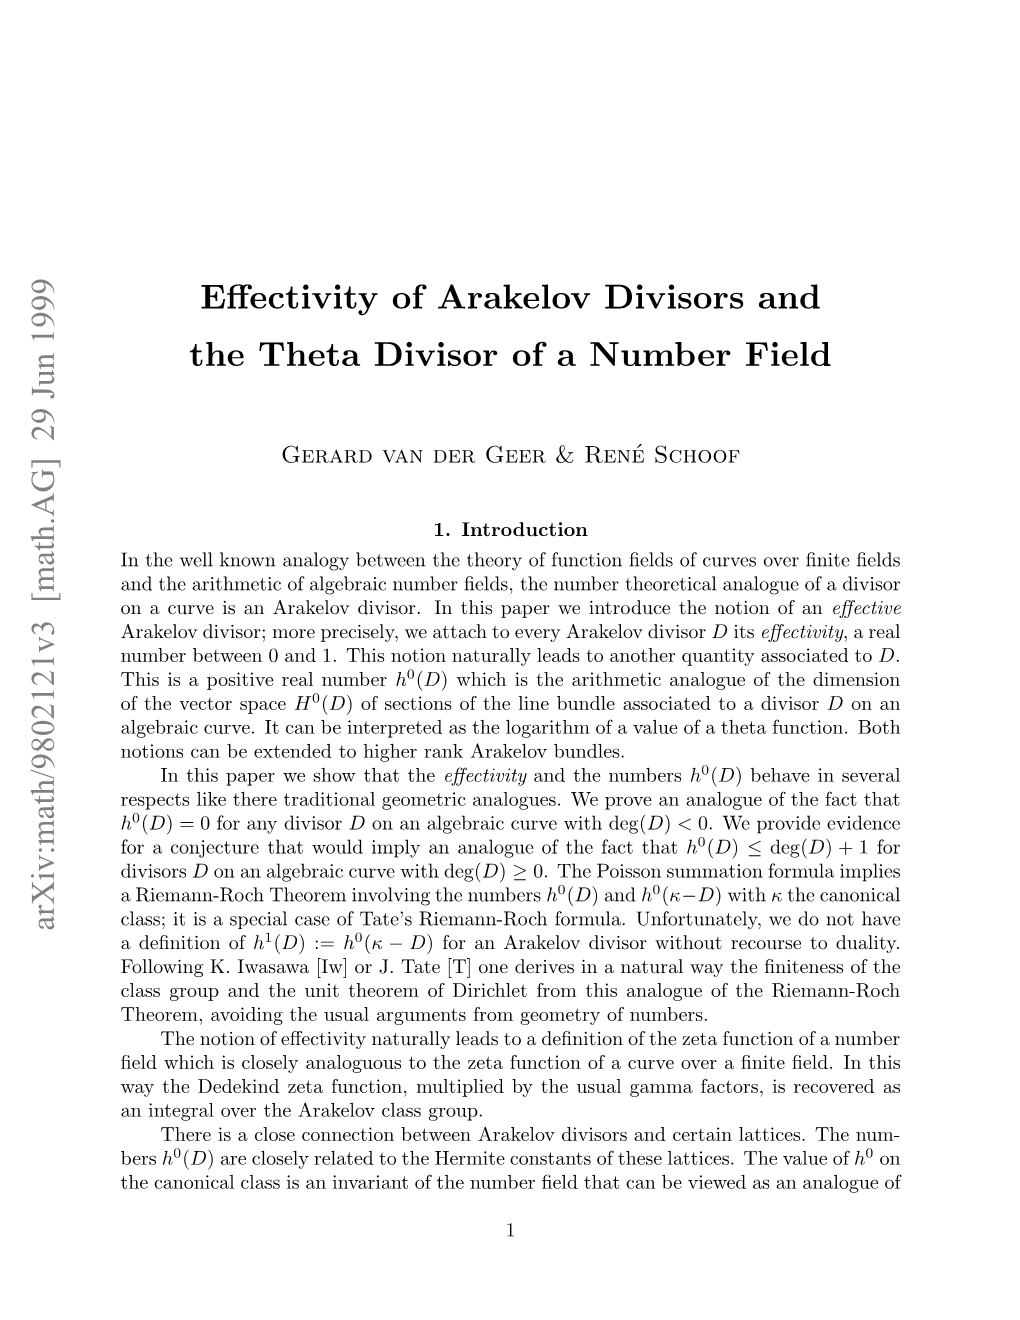 Effectivity of Arakelov Divisors and the Theta Divisor of a Number Field